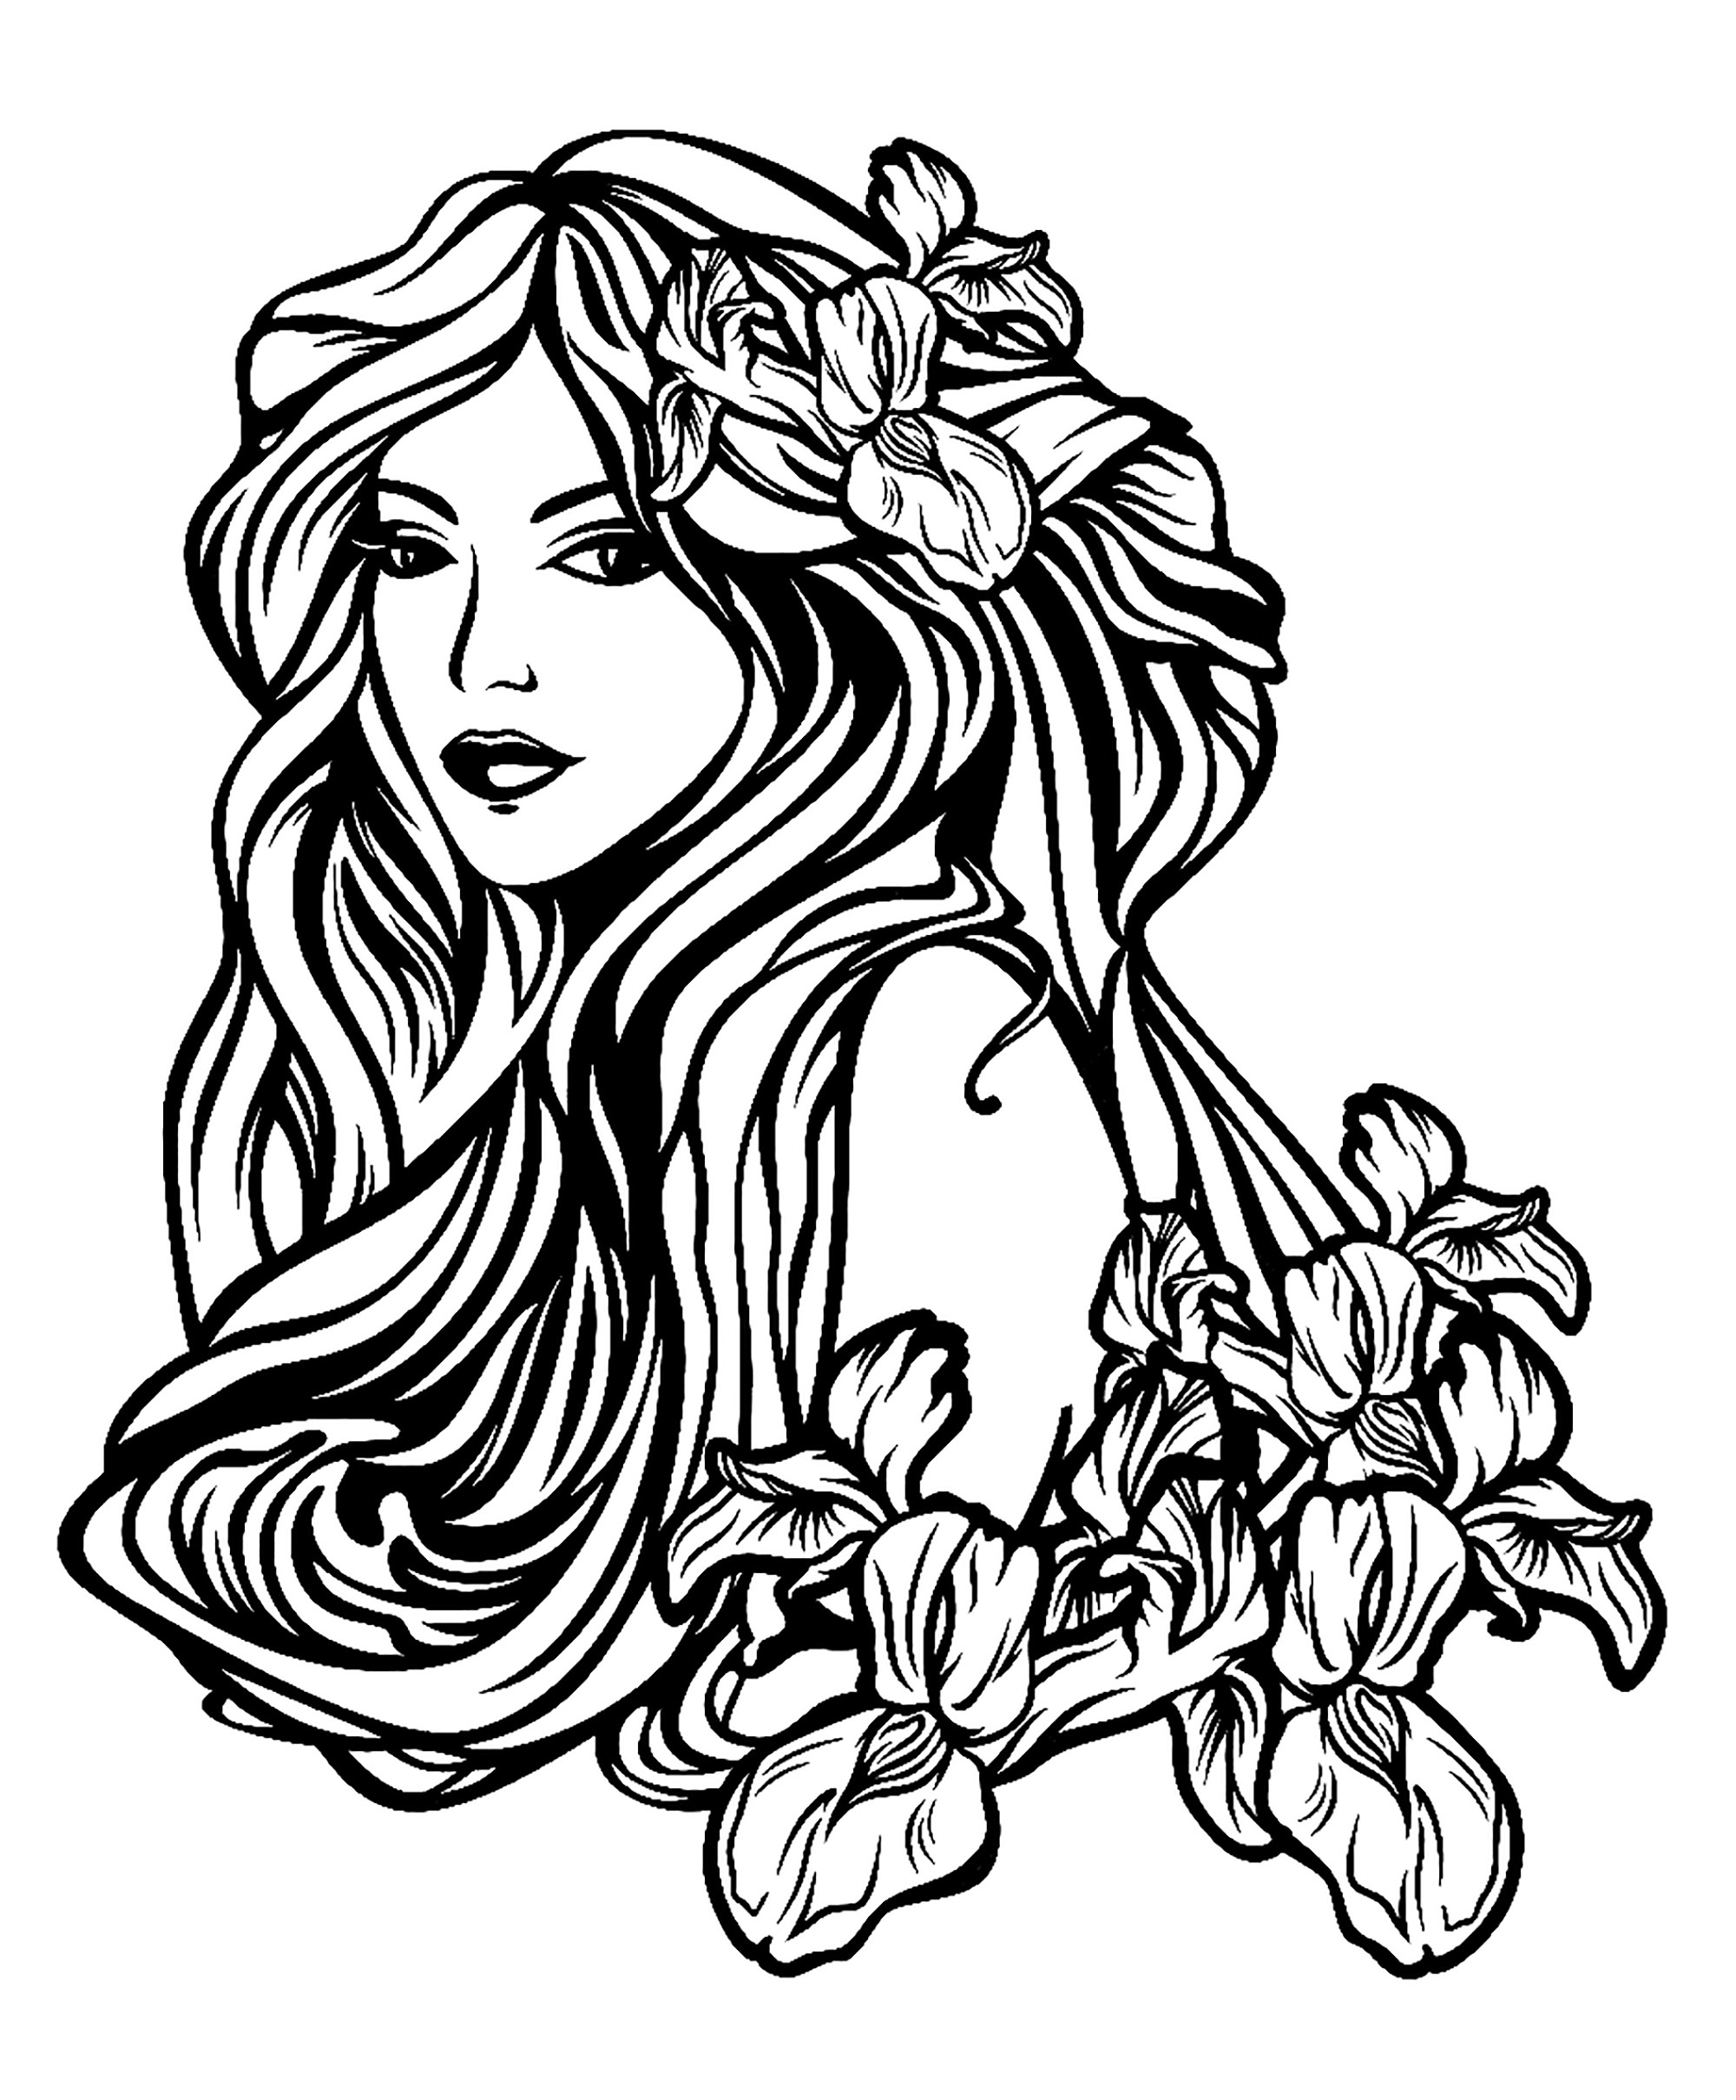 Beautiful woman with long hair among iris flowers - Art nouveau style, perfect for a tattoo, Artist : Svetlana Alyuk   Source : 123rf